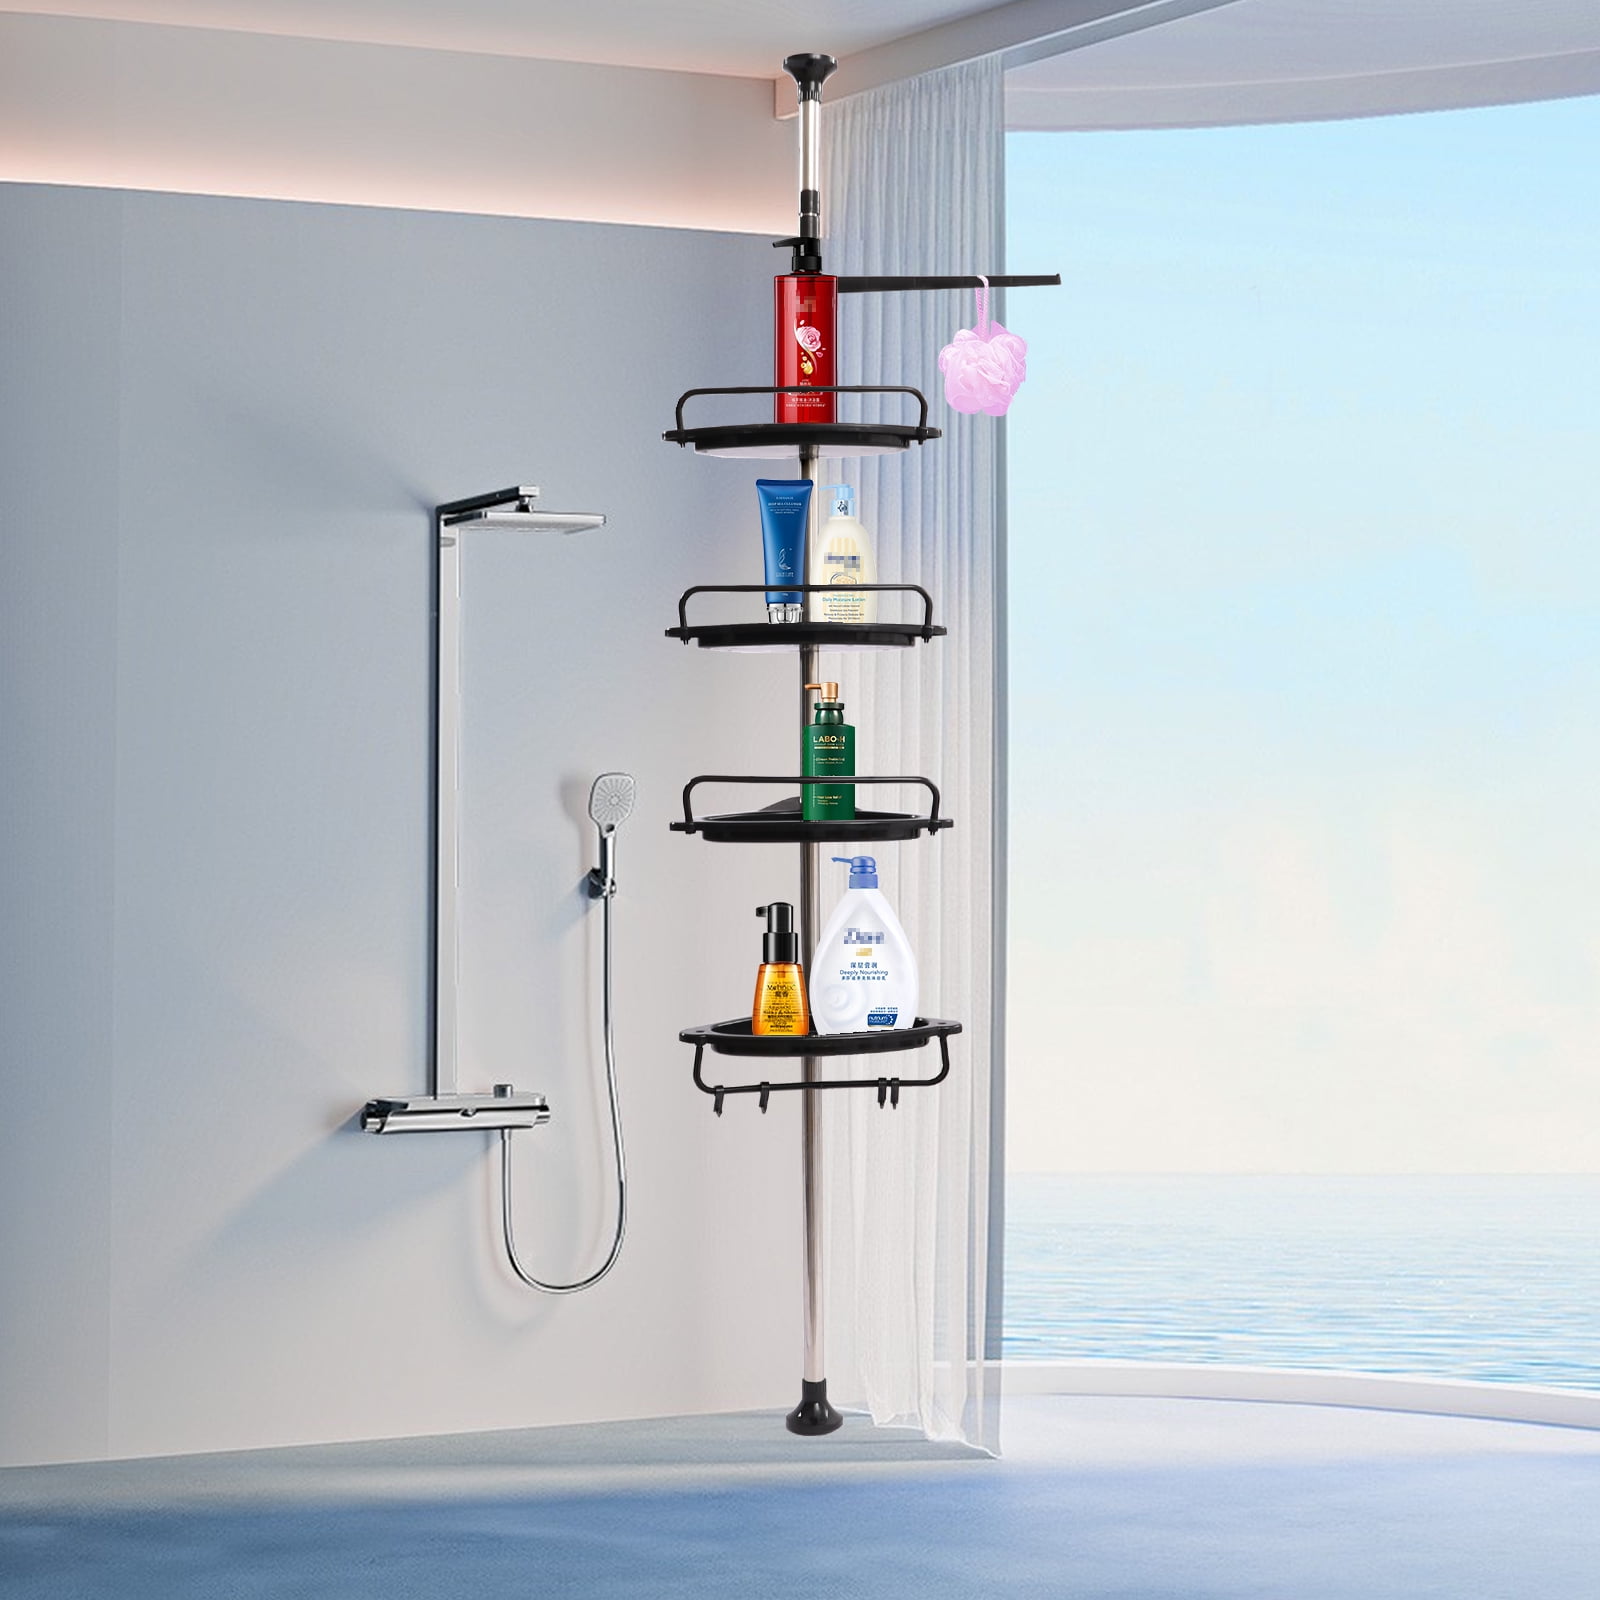 Hamitor Corner Shower Caddy Tension Pole: Adjustable Stainless Steel Shower Organizer with 4 Tier Shelf for Bathroom Bathtub Tub Shampoo - Floor